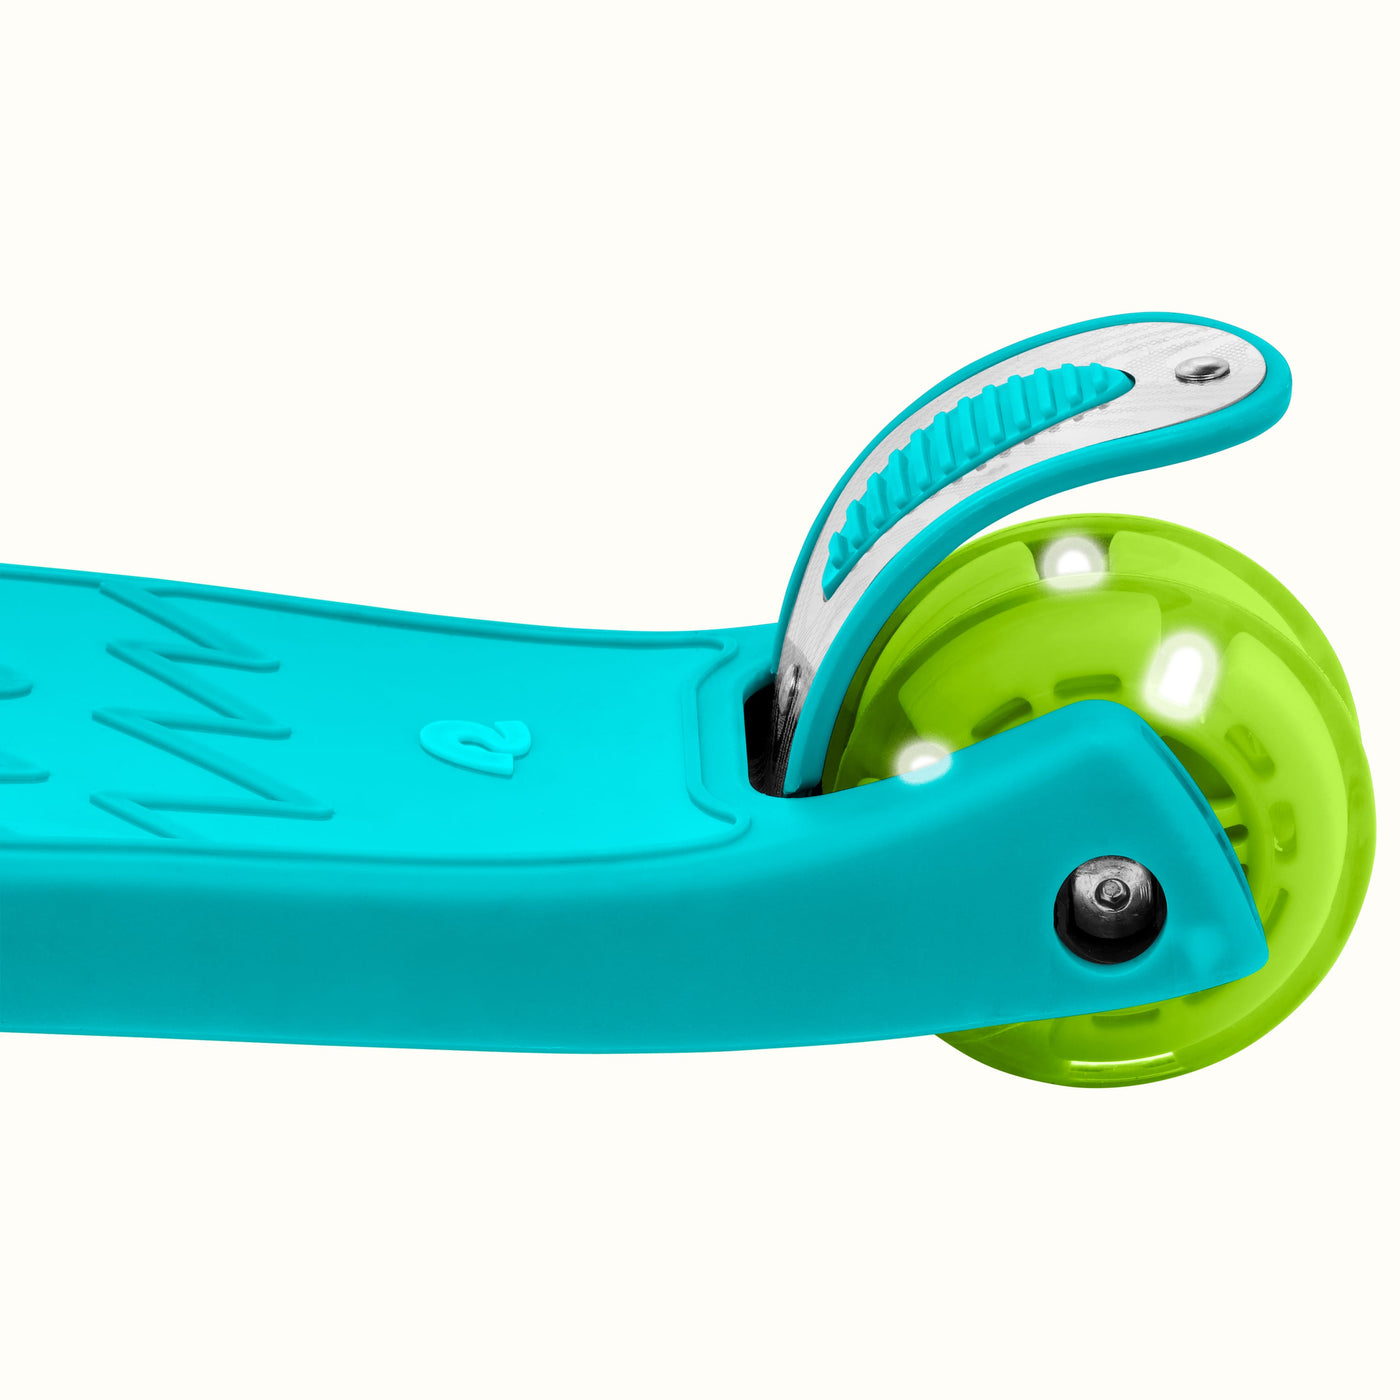 Chipmunk Plus Kids’ Kick Scooter (3+ years) | Turquoise